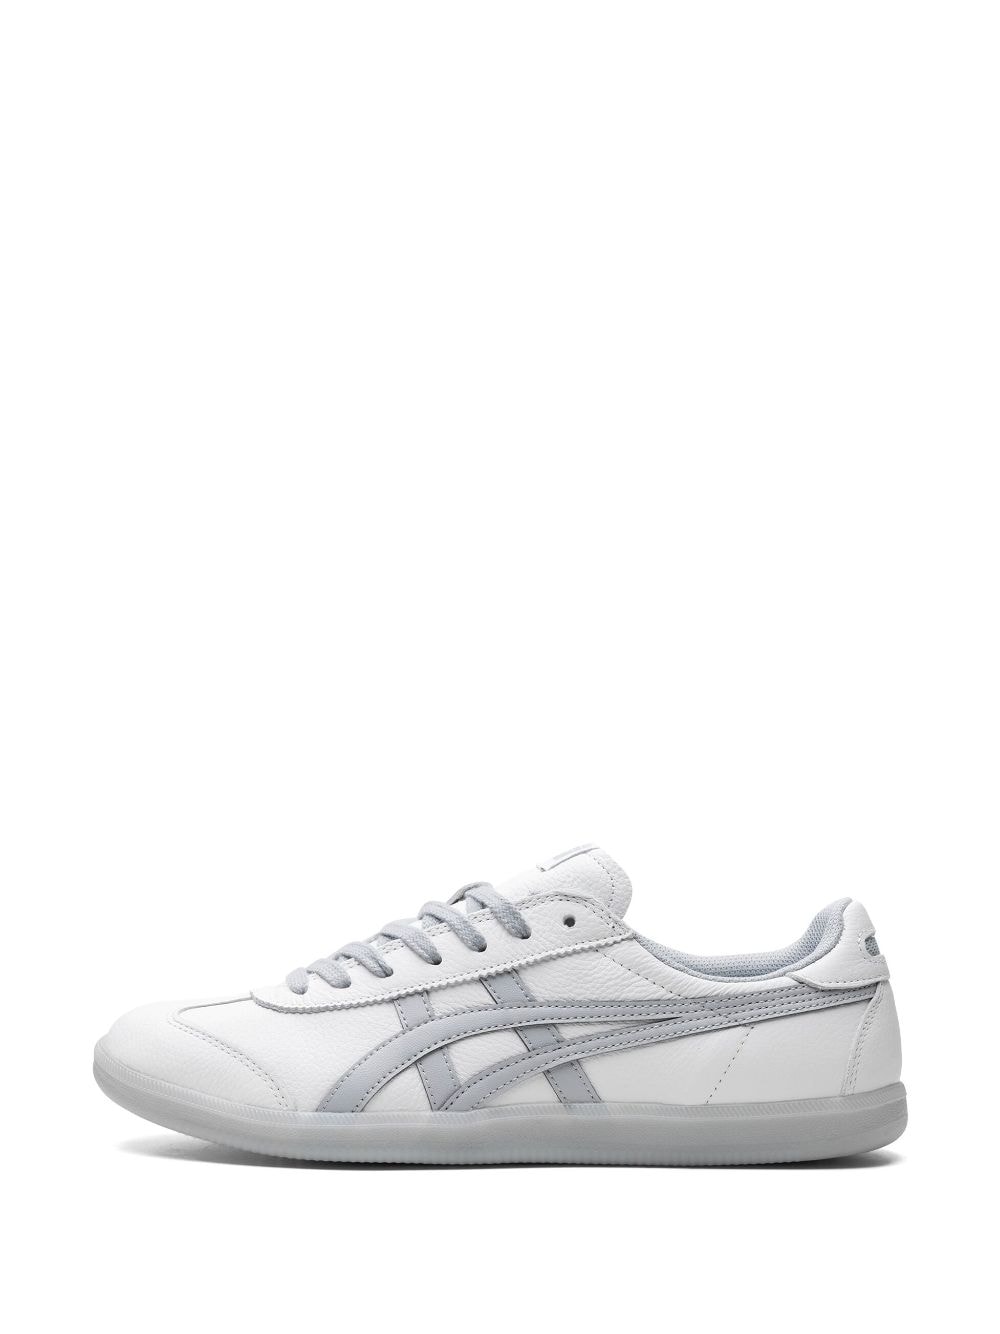 Shop Onitsuka Tiger Tokuten "white/grey" Sneakers